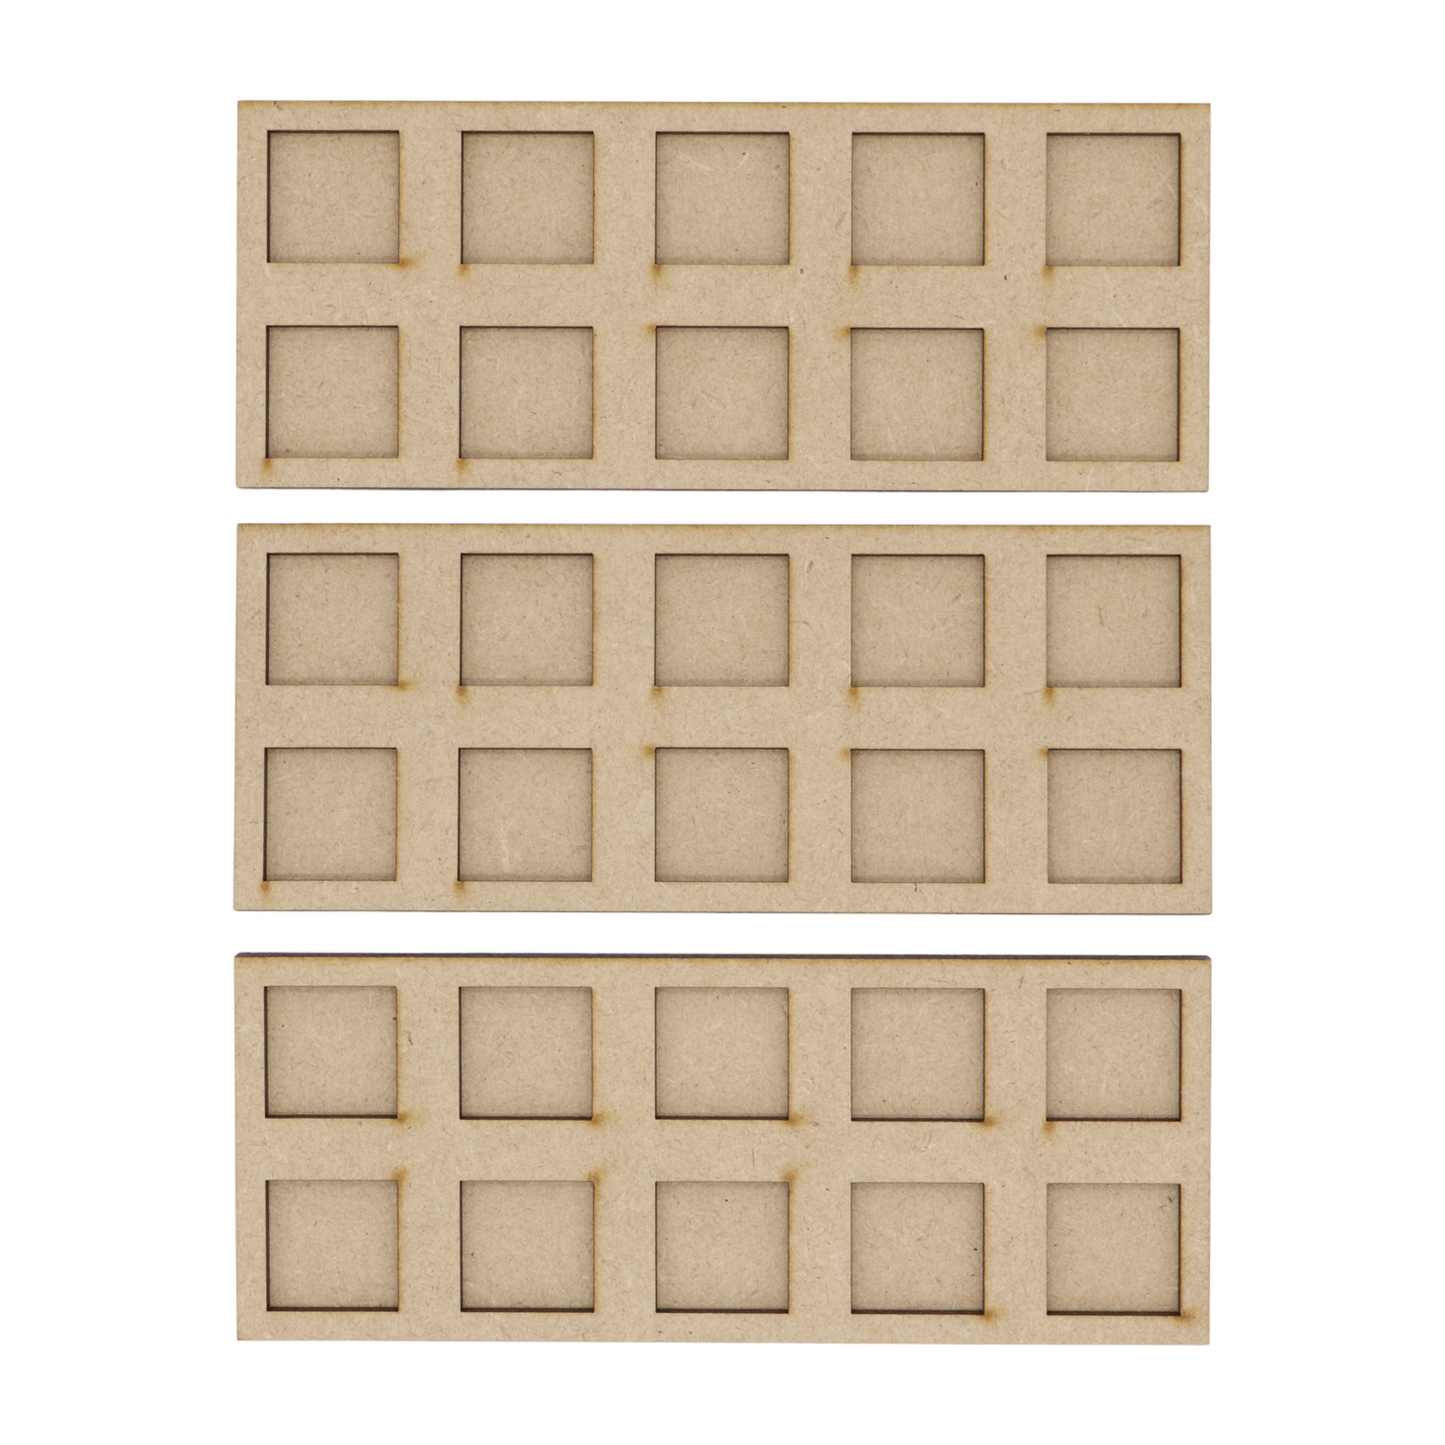 5x2 - 20mm Square Movement Tray